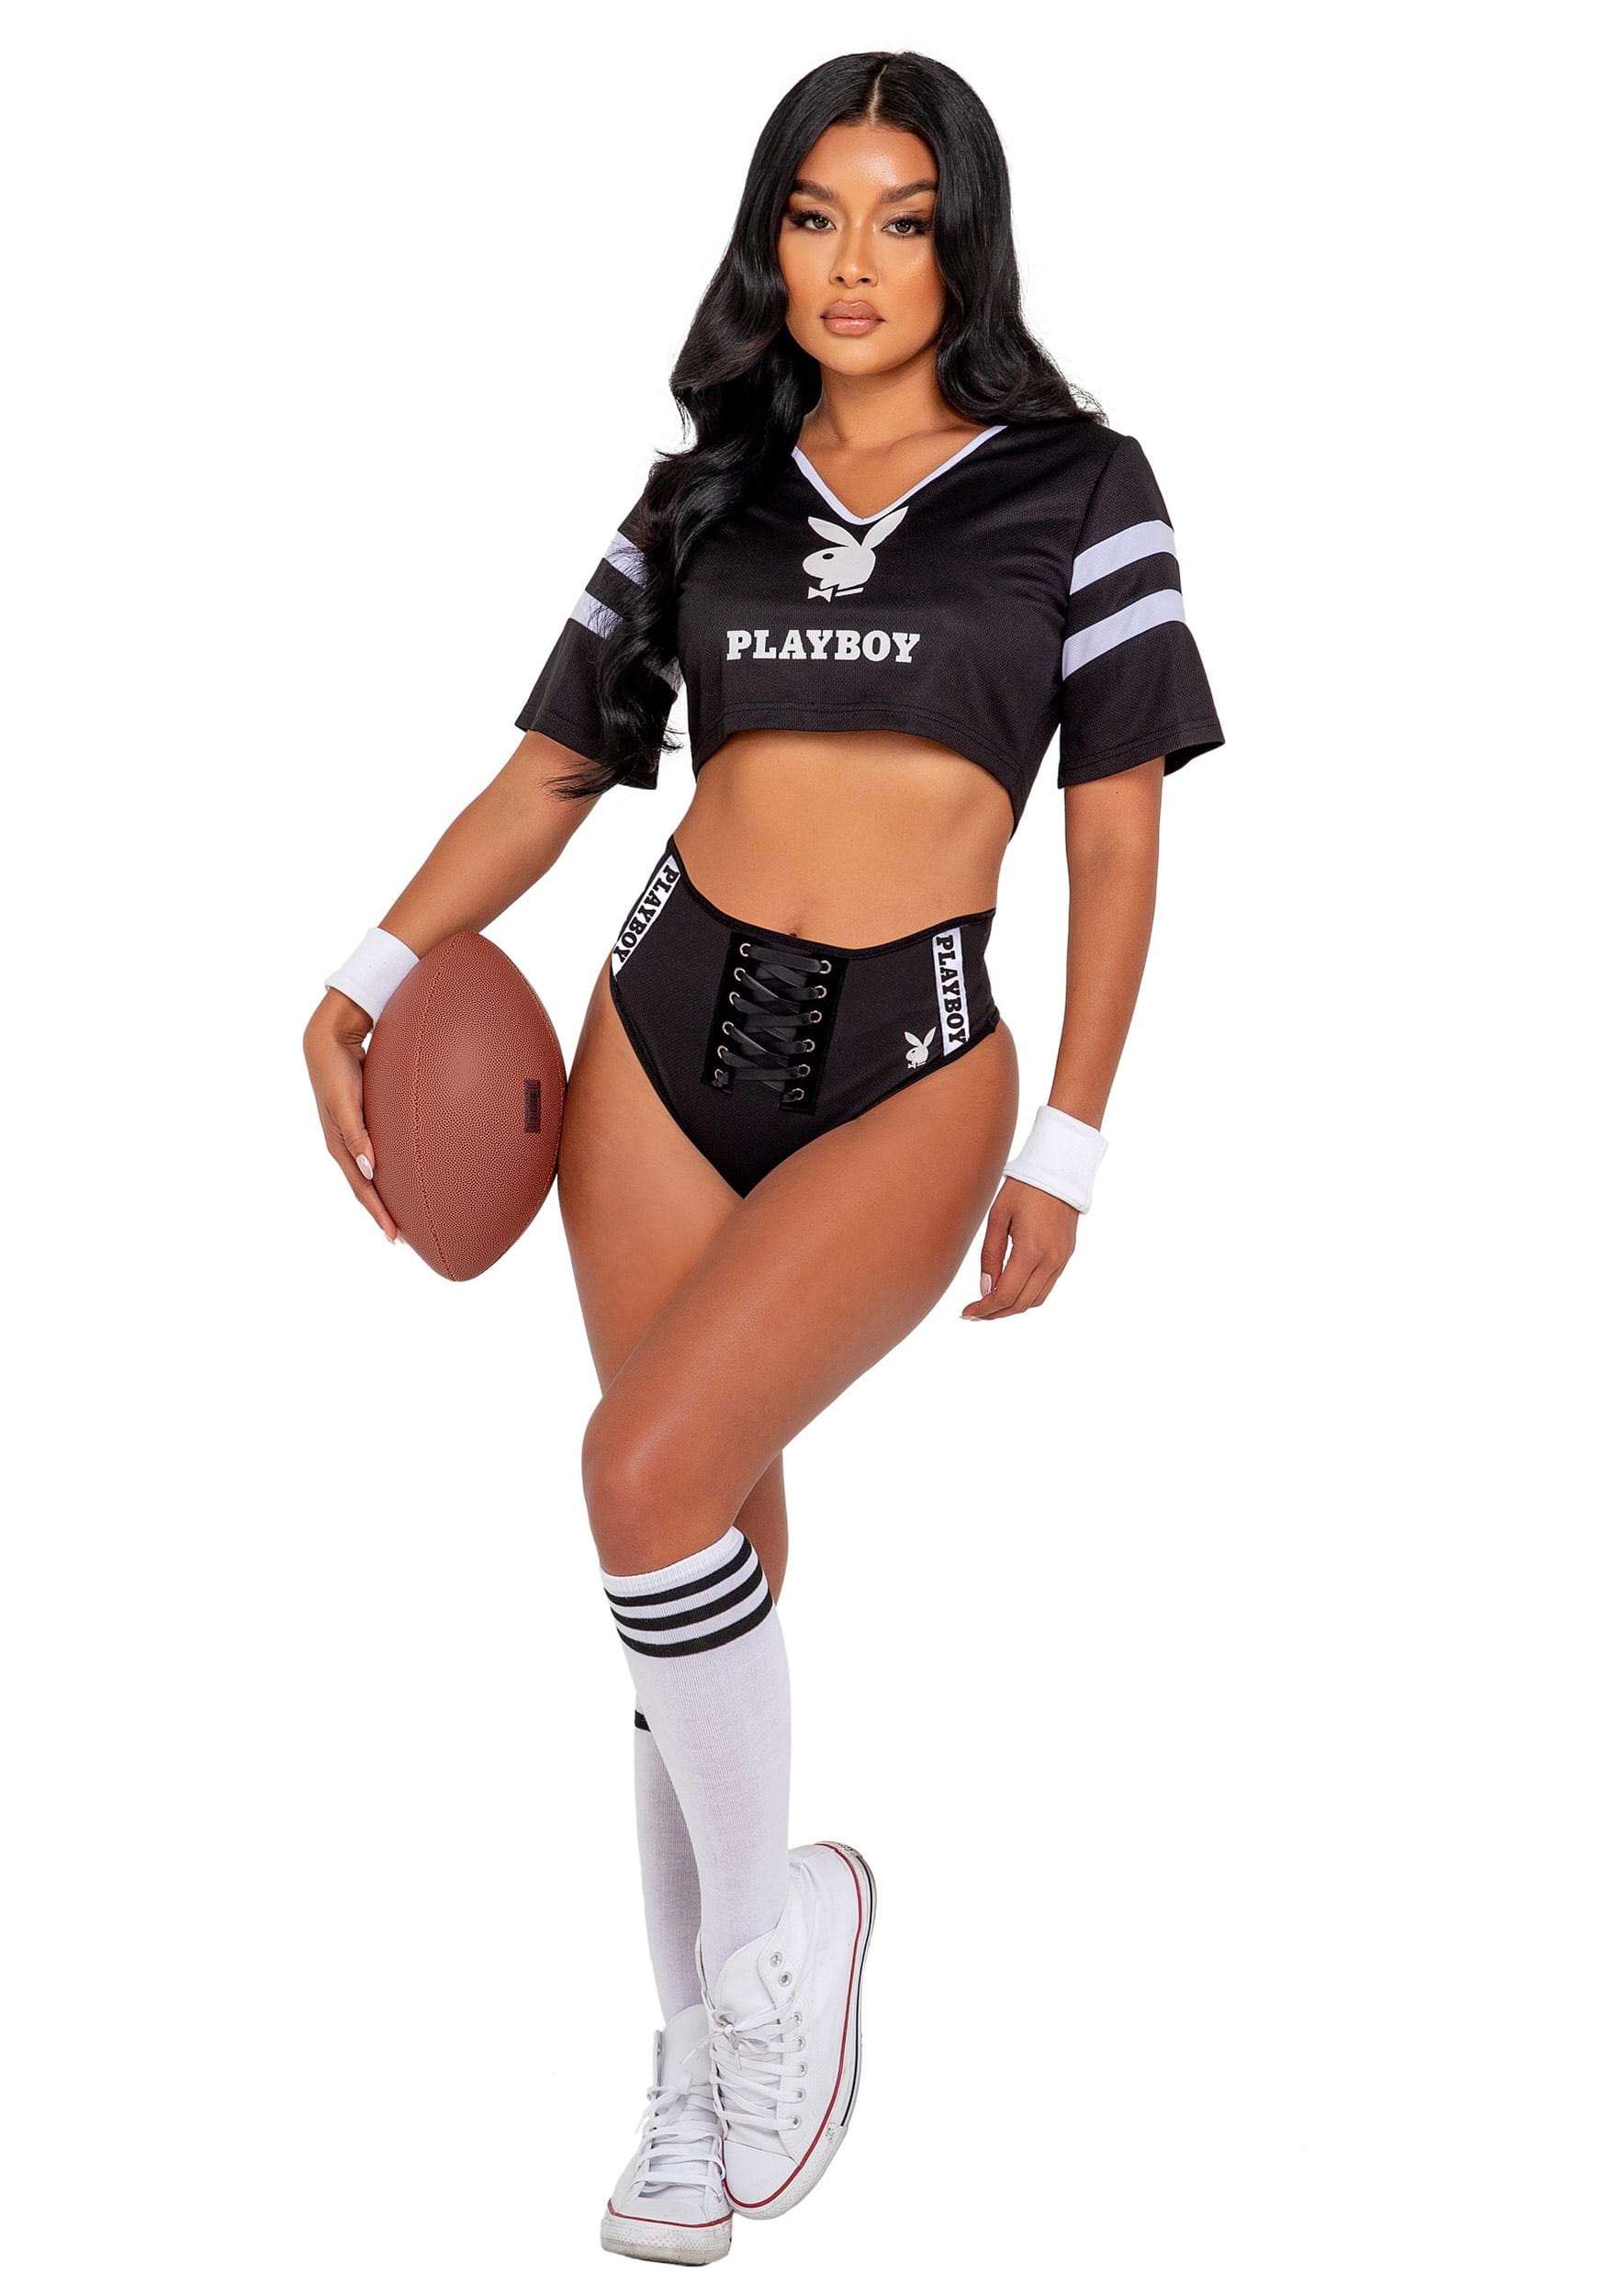 Playboy Women's Football Costume